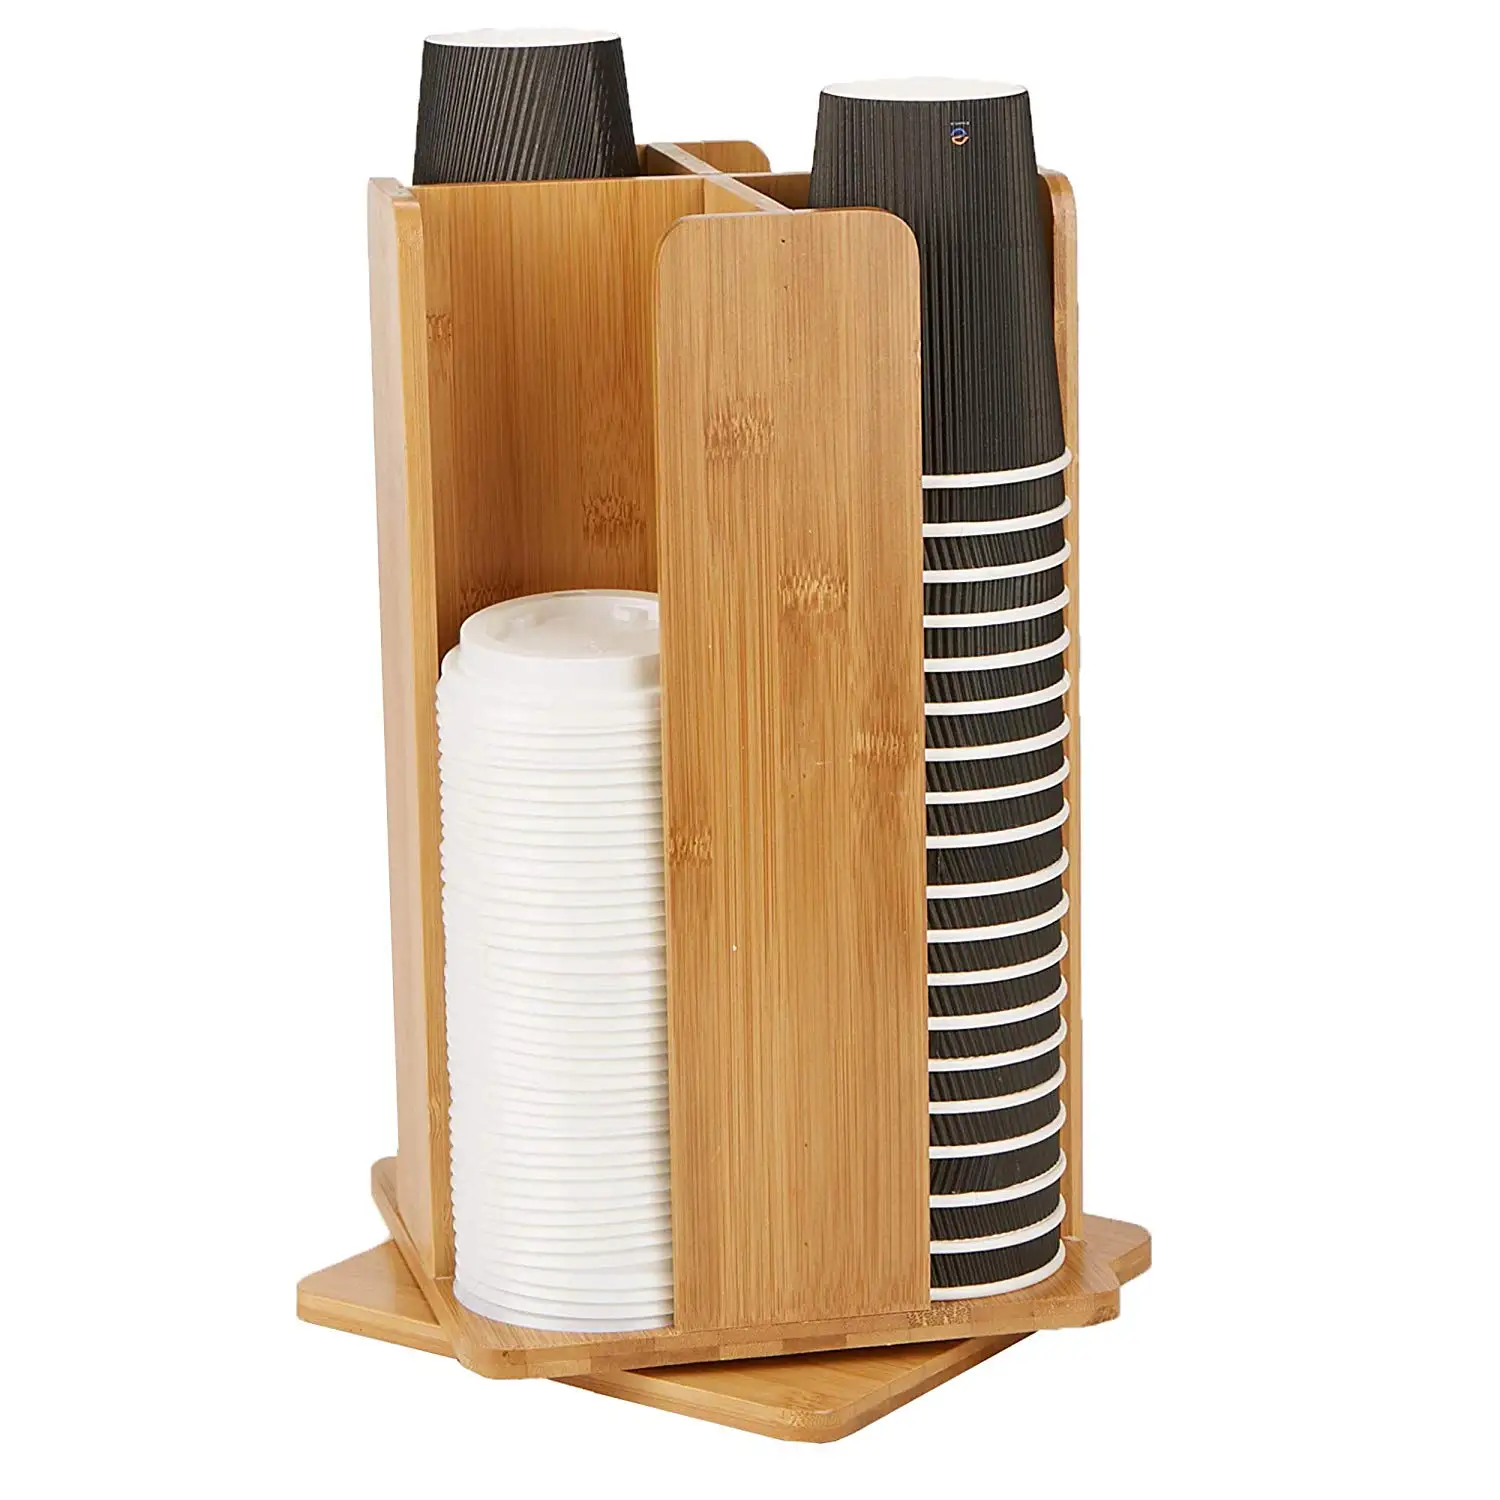 4 divide Bamboo Tea Coffee bag Holder Storage Organizer condiment organizer coffee accessories